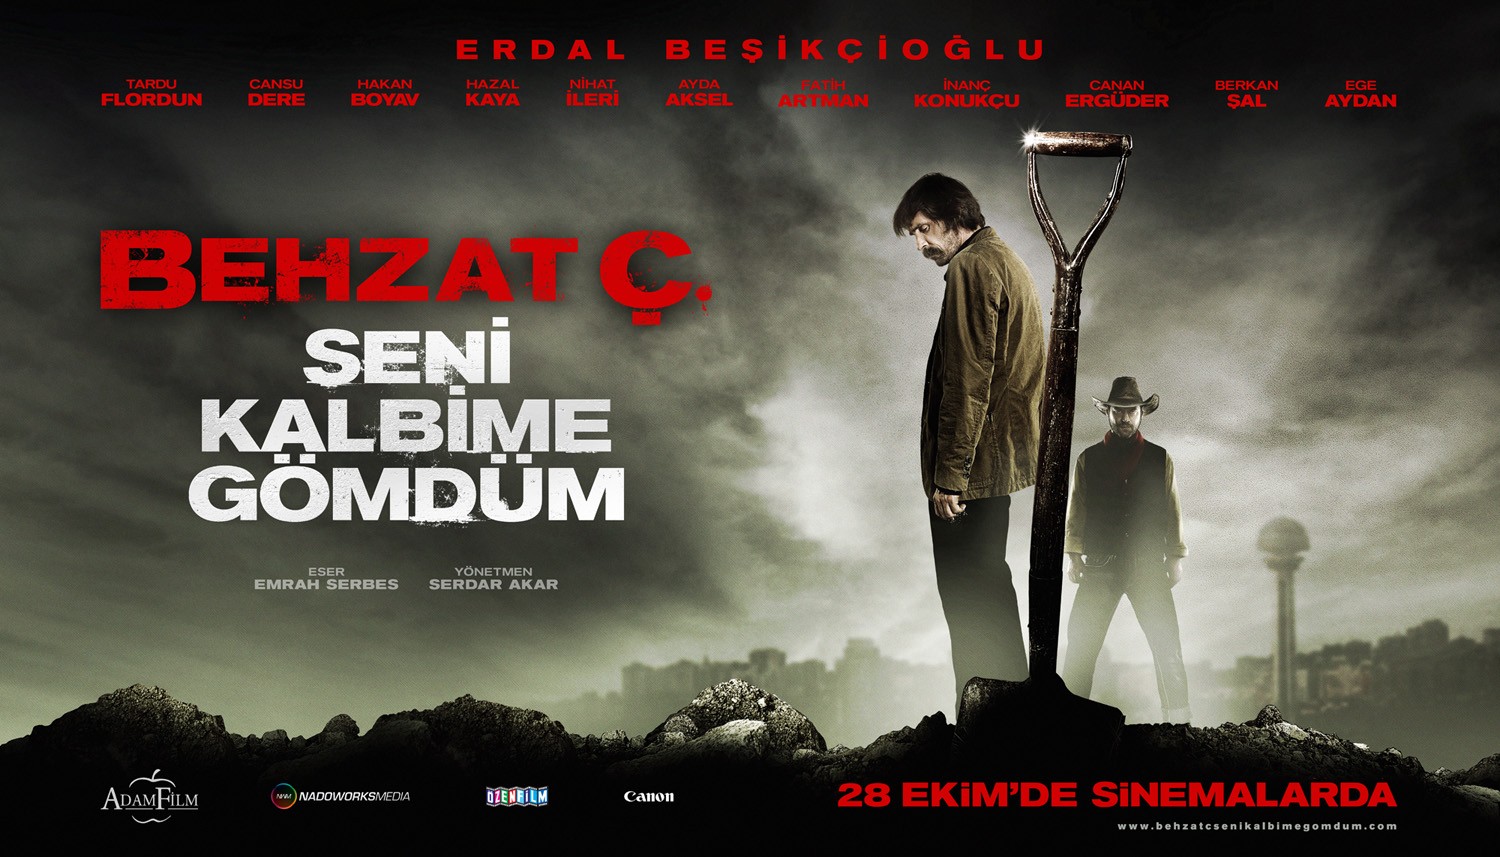 Extra Large Movie Poster Image for Behzat Ç - Seni Kalbime Gömdüm (#11 of 12)